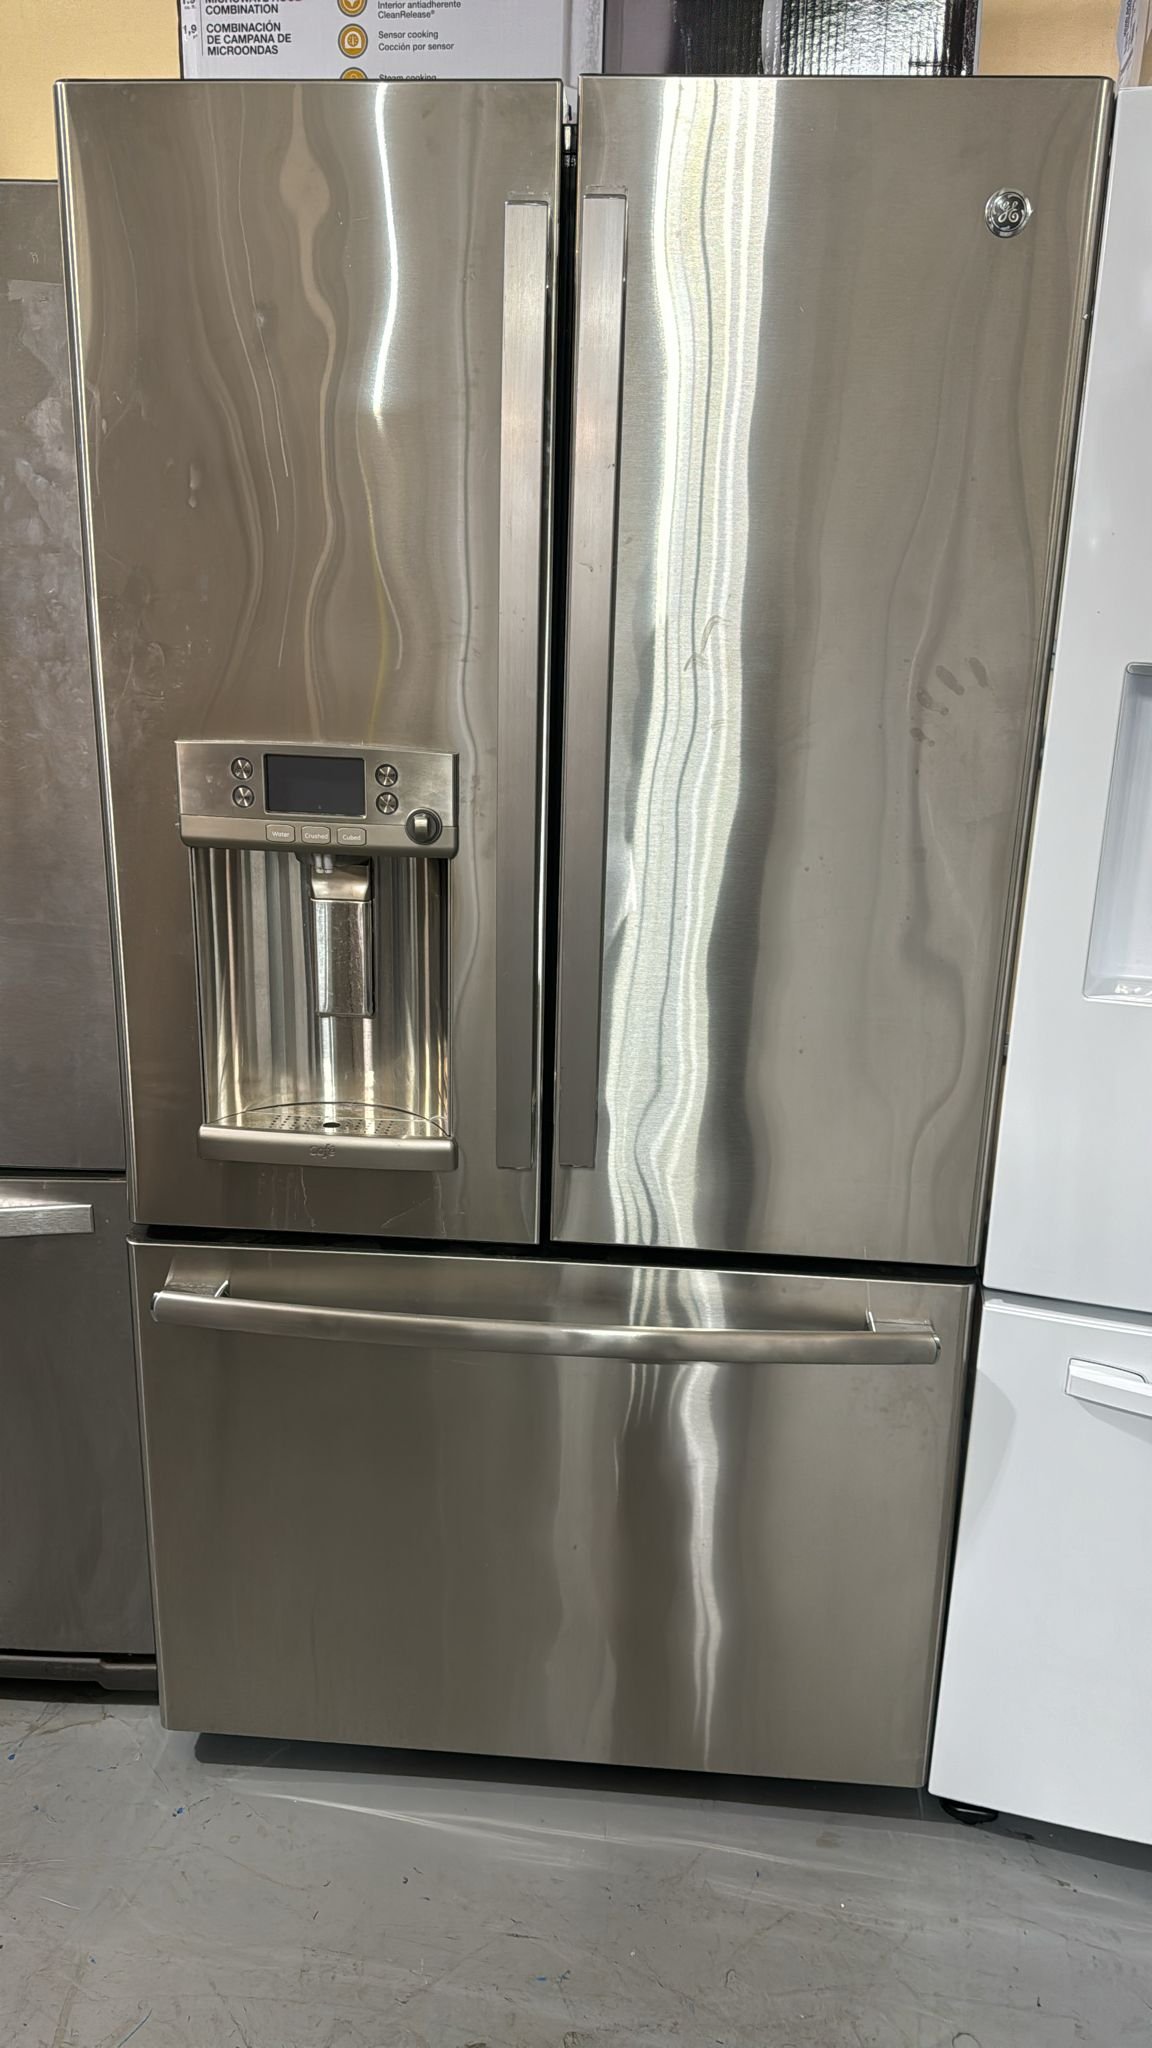 GE Like New 3 Door Frenchdoor Refrigerator – Stainless